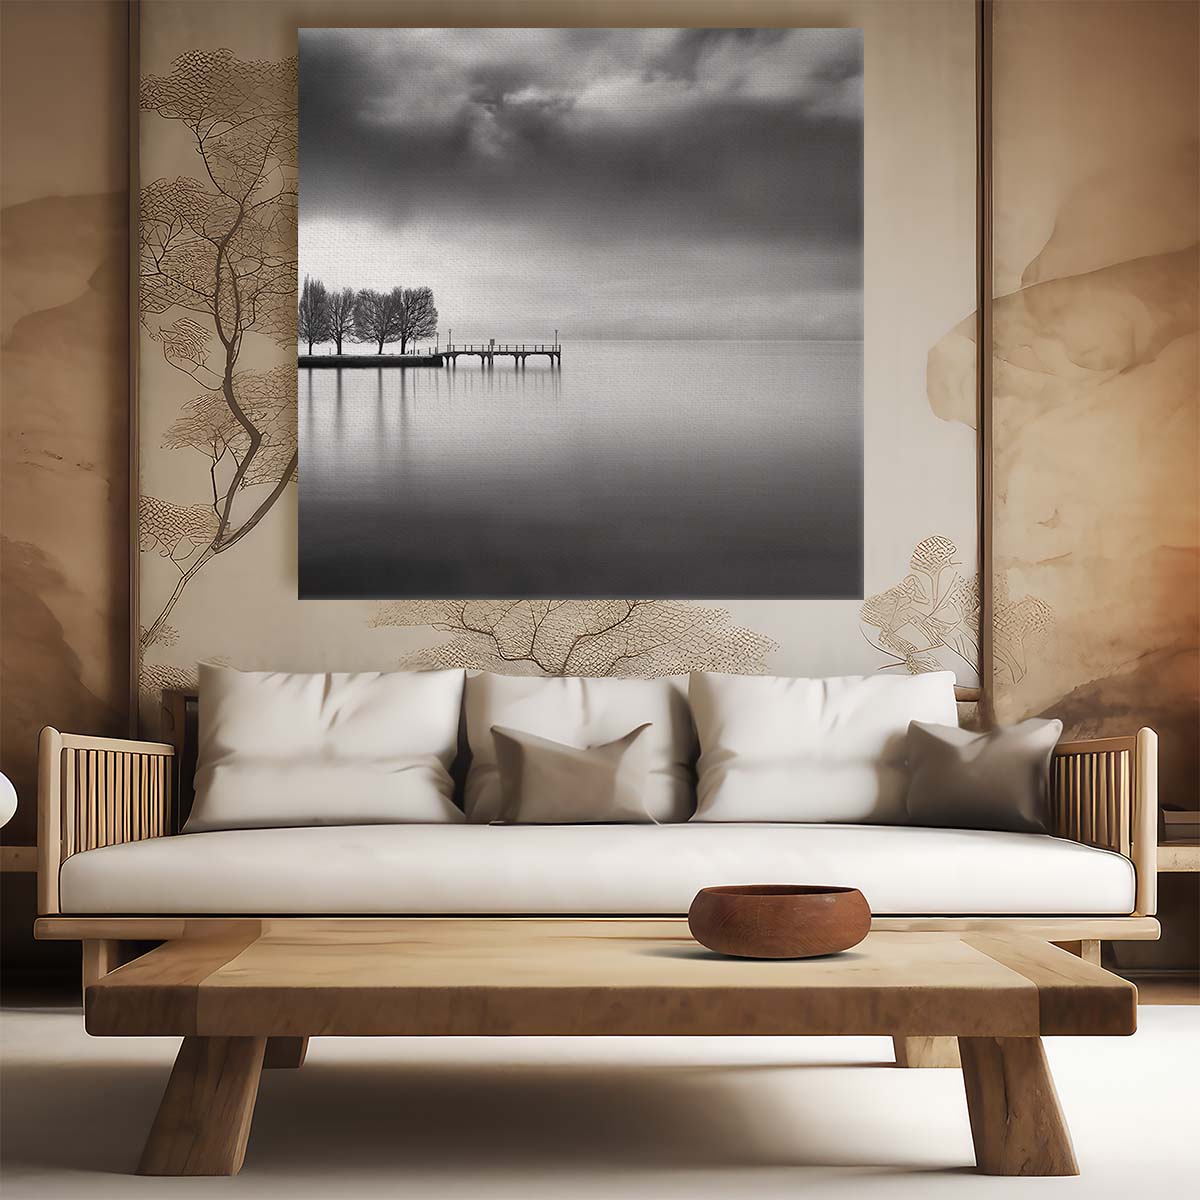 Monochrome Zen Pier Landscape Serene Lake Photography Wall Art by Luxuriance Designs. Made in USA.